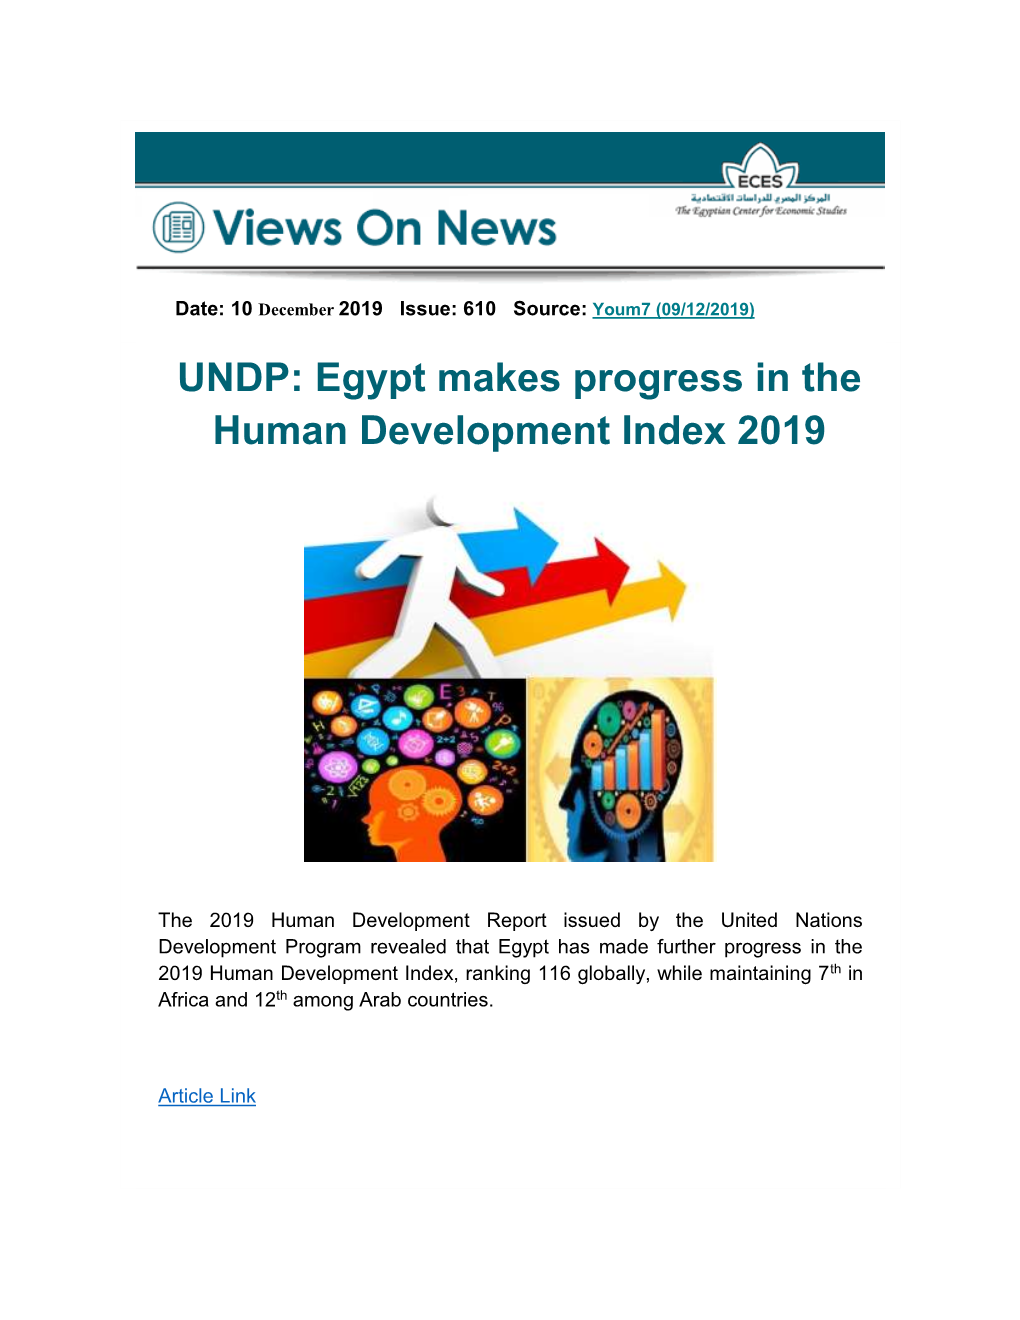 UNDP: Egypt Makes Progress in the Human Development Index 2019